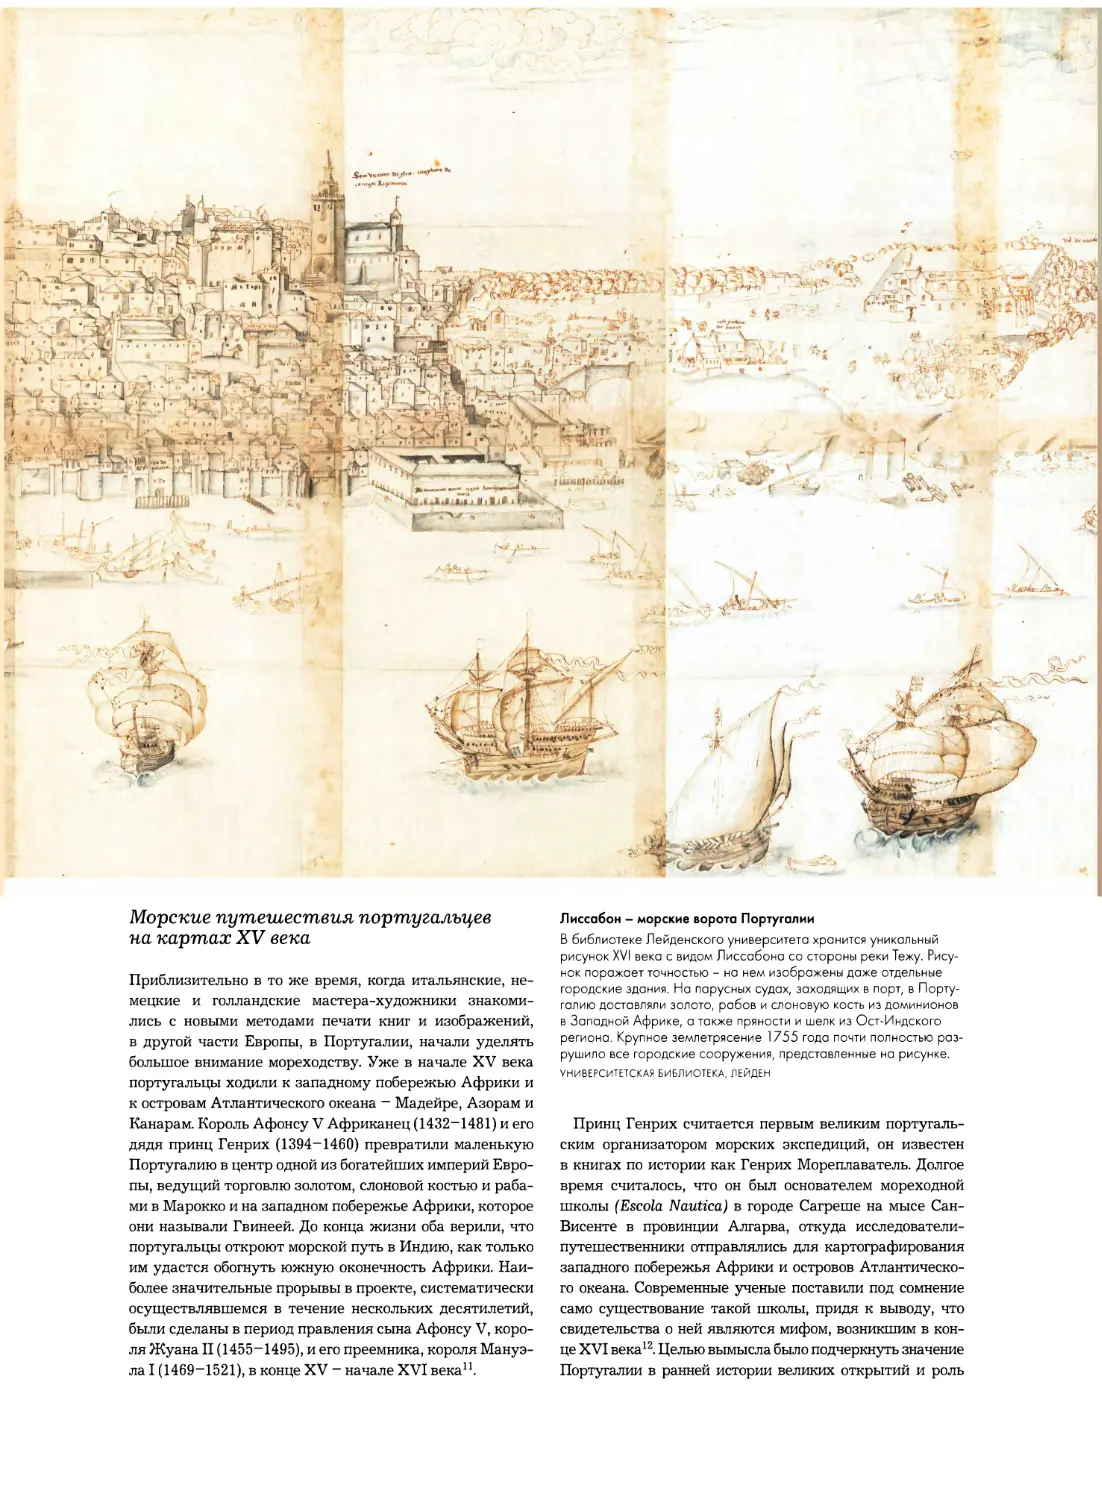 Морские путешествия португальцев на картах XV века